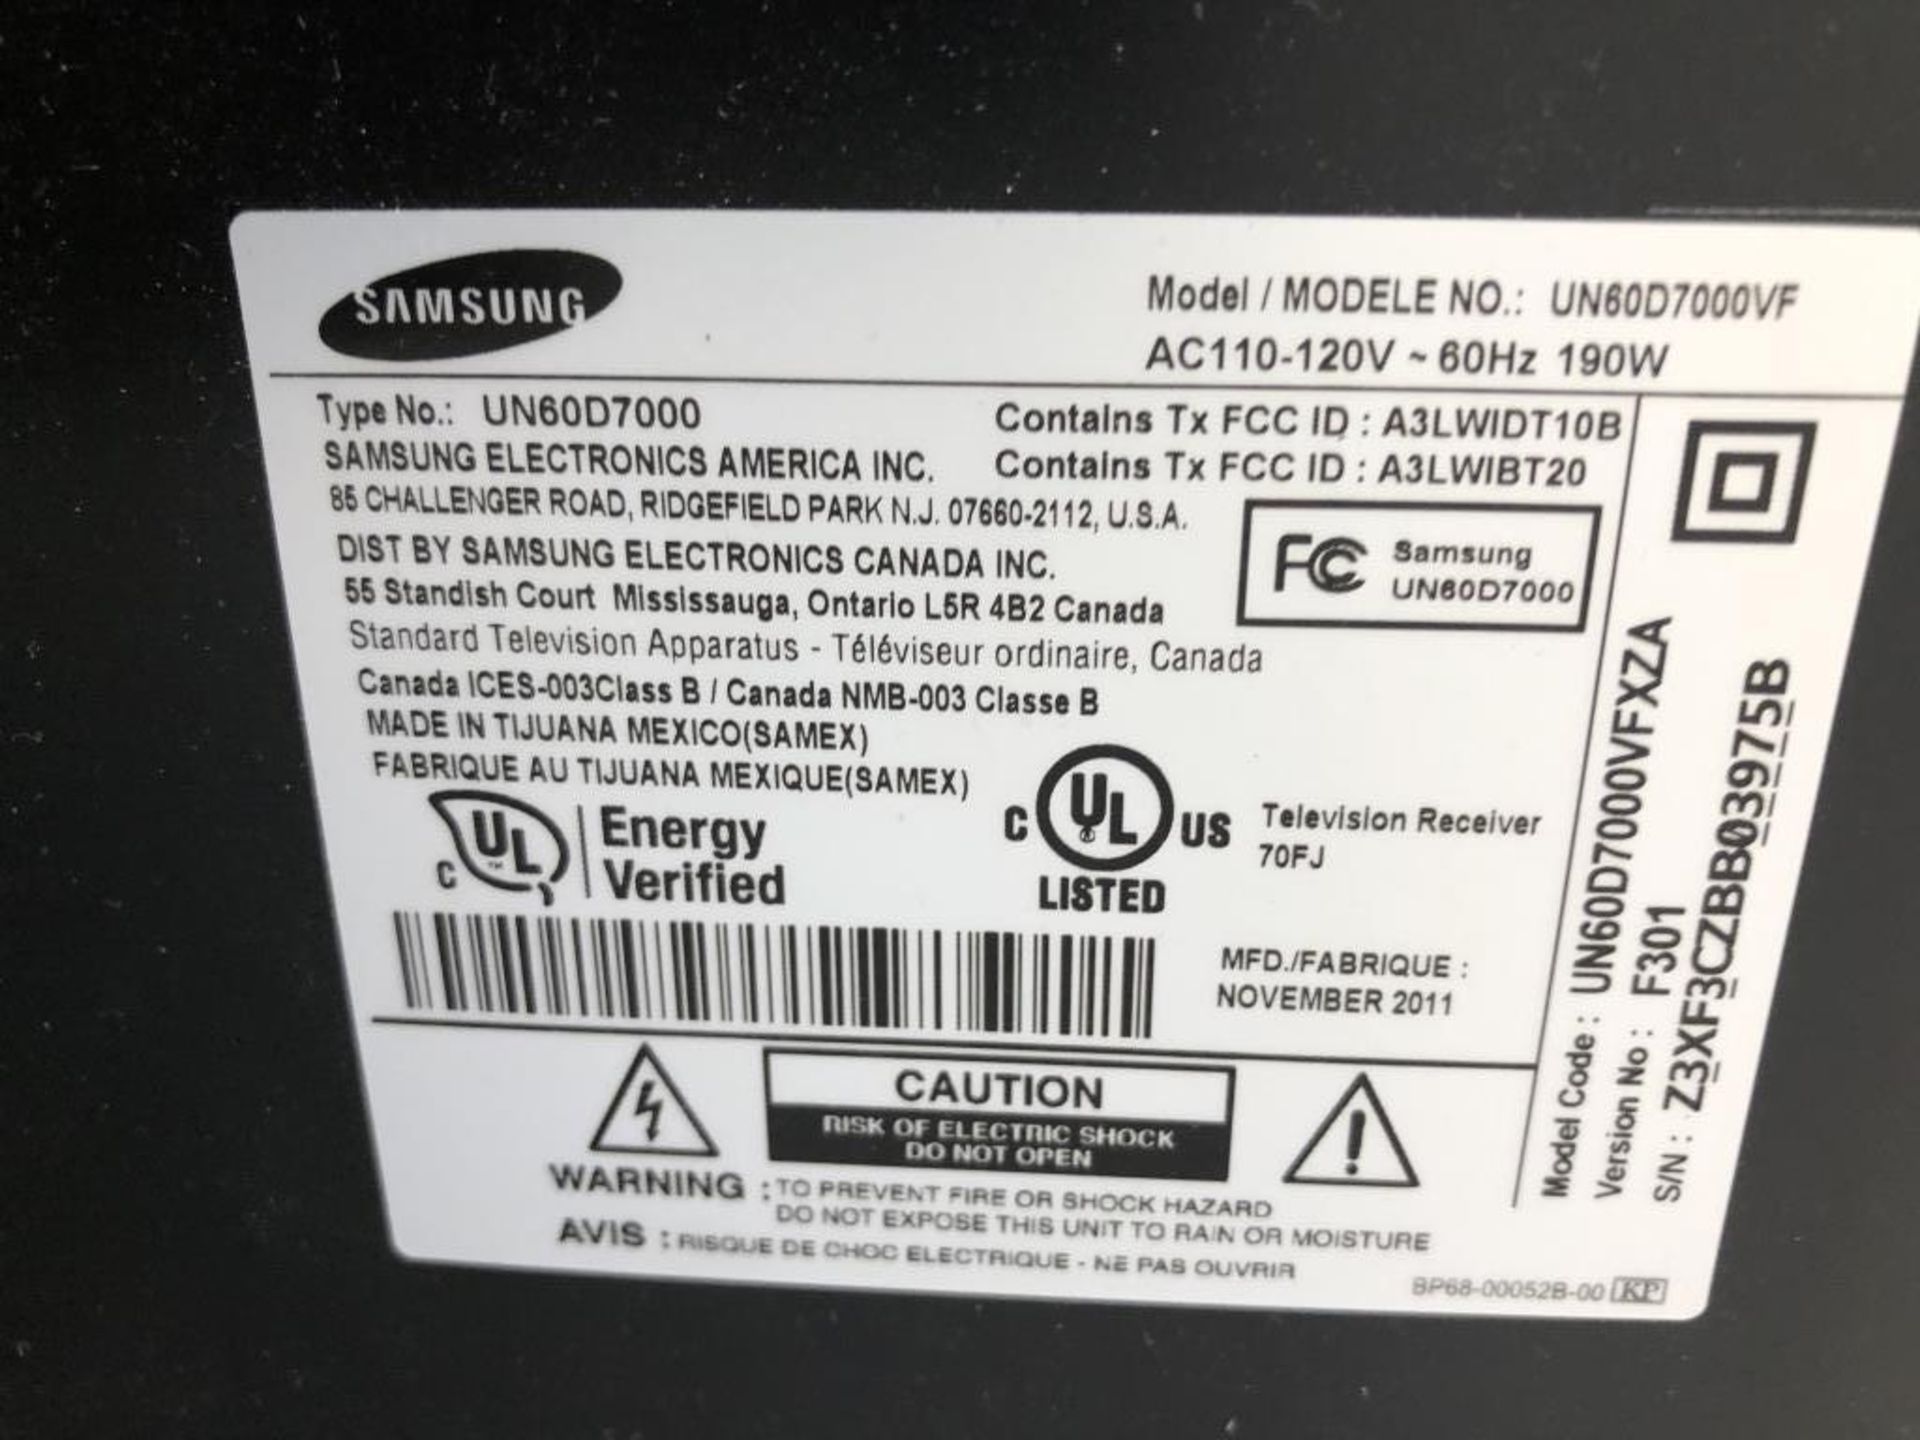 Samsung LED TV 60" - Image 2 of 2